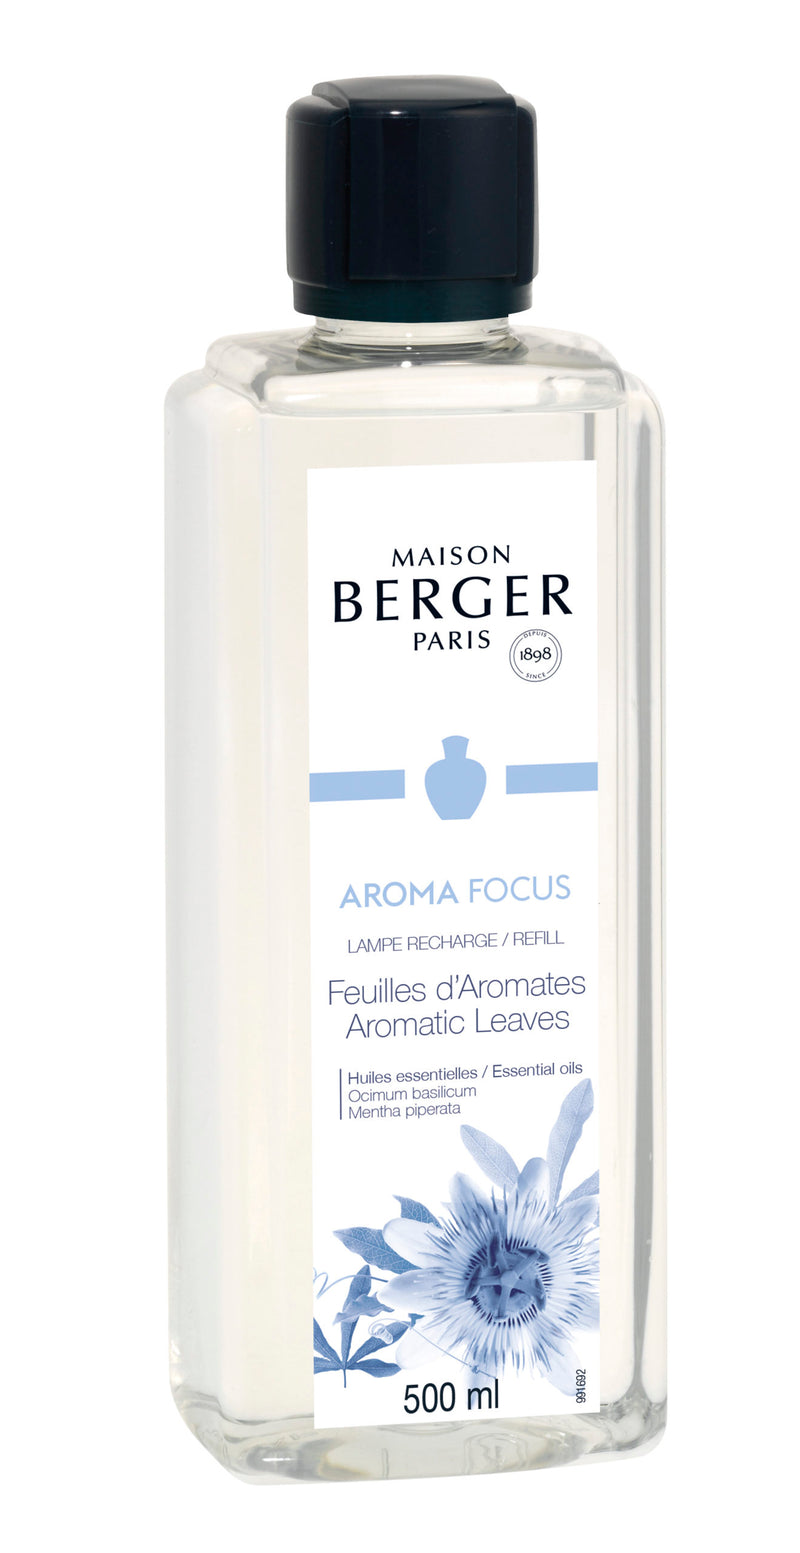 Lampe Berger huisparfum 500 ml - Aroma focus, Aromatic leaves / Feuilles d’Aromates